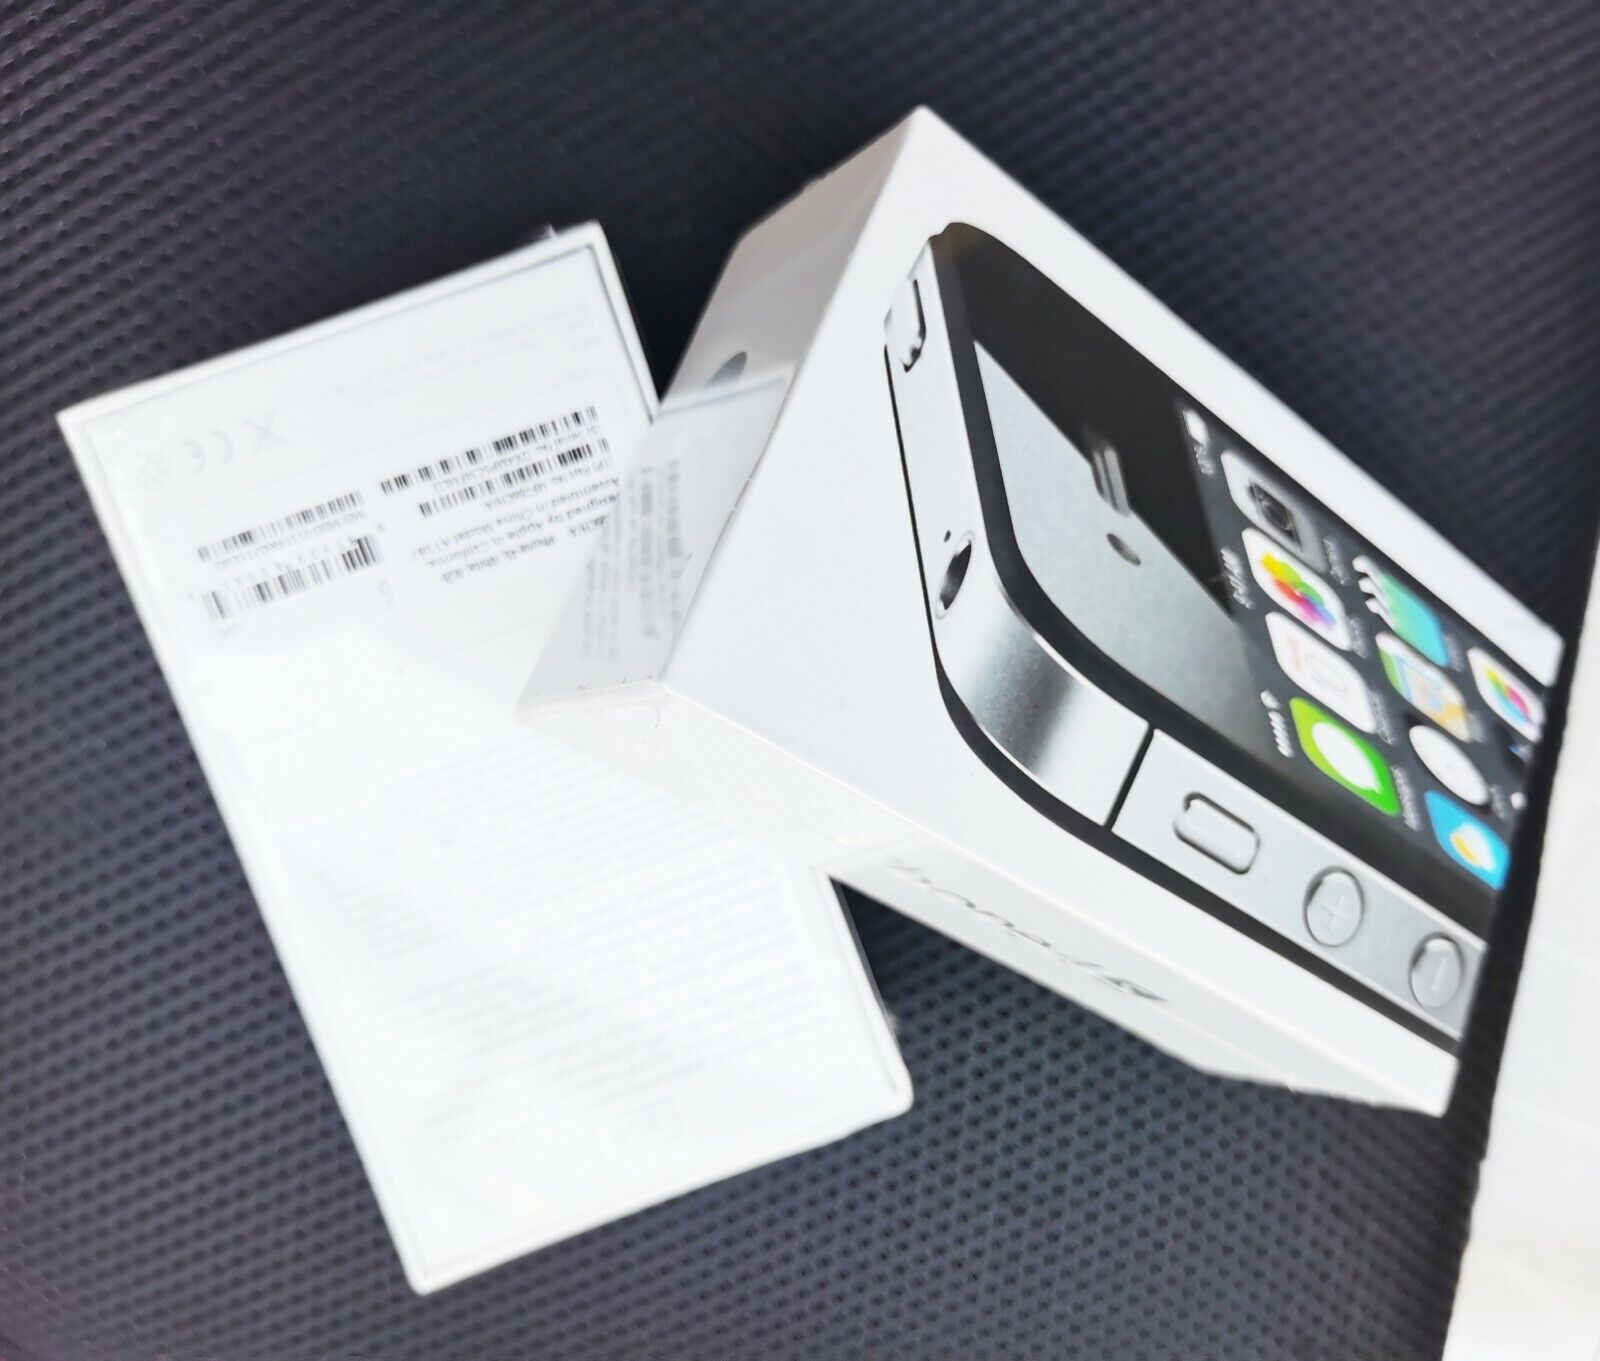 The Price of Apple iPhone 4s – 32GB – Black (CDMA + GSM) IOS 6.1.3 Unlocked for all Netwroks | Apple iPhone